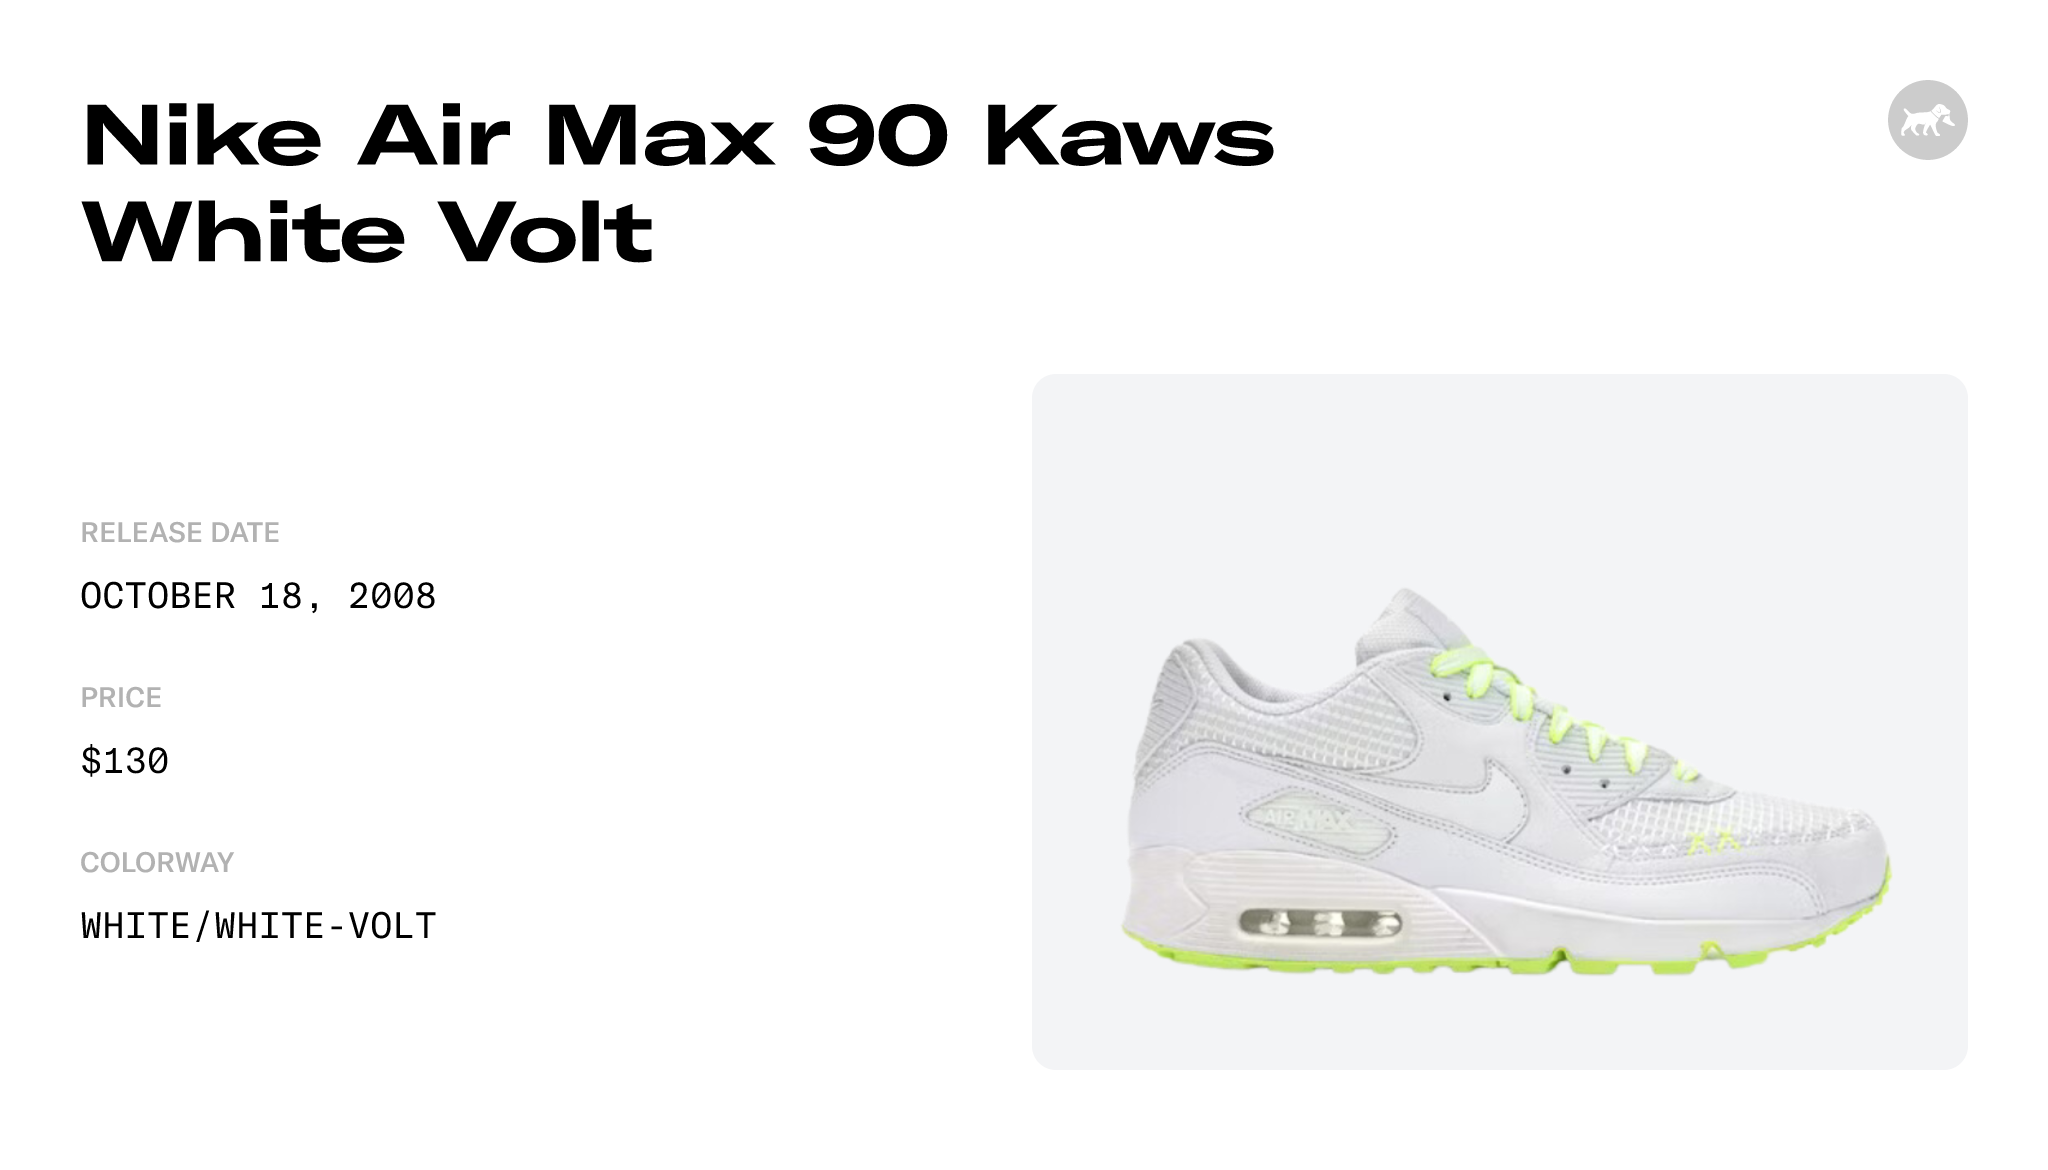 Nike Air Max 90 Kaws White Volt - 346115-111 Raffles and Release Date